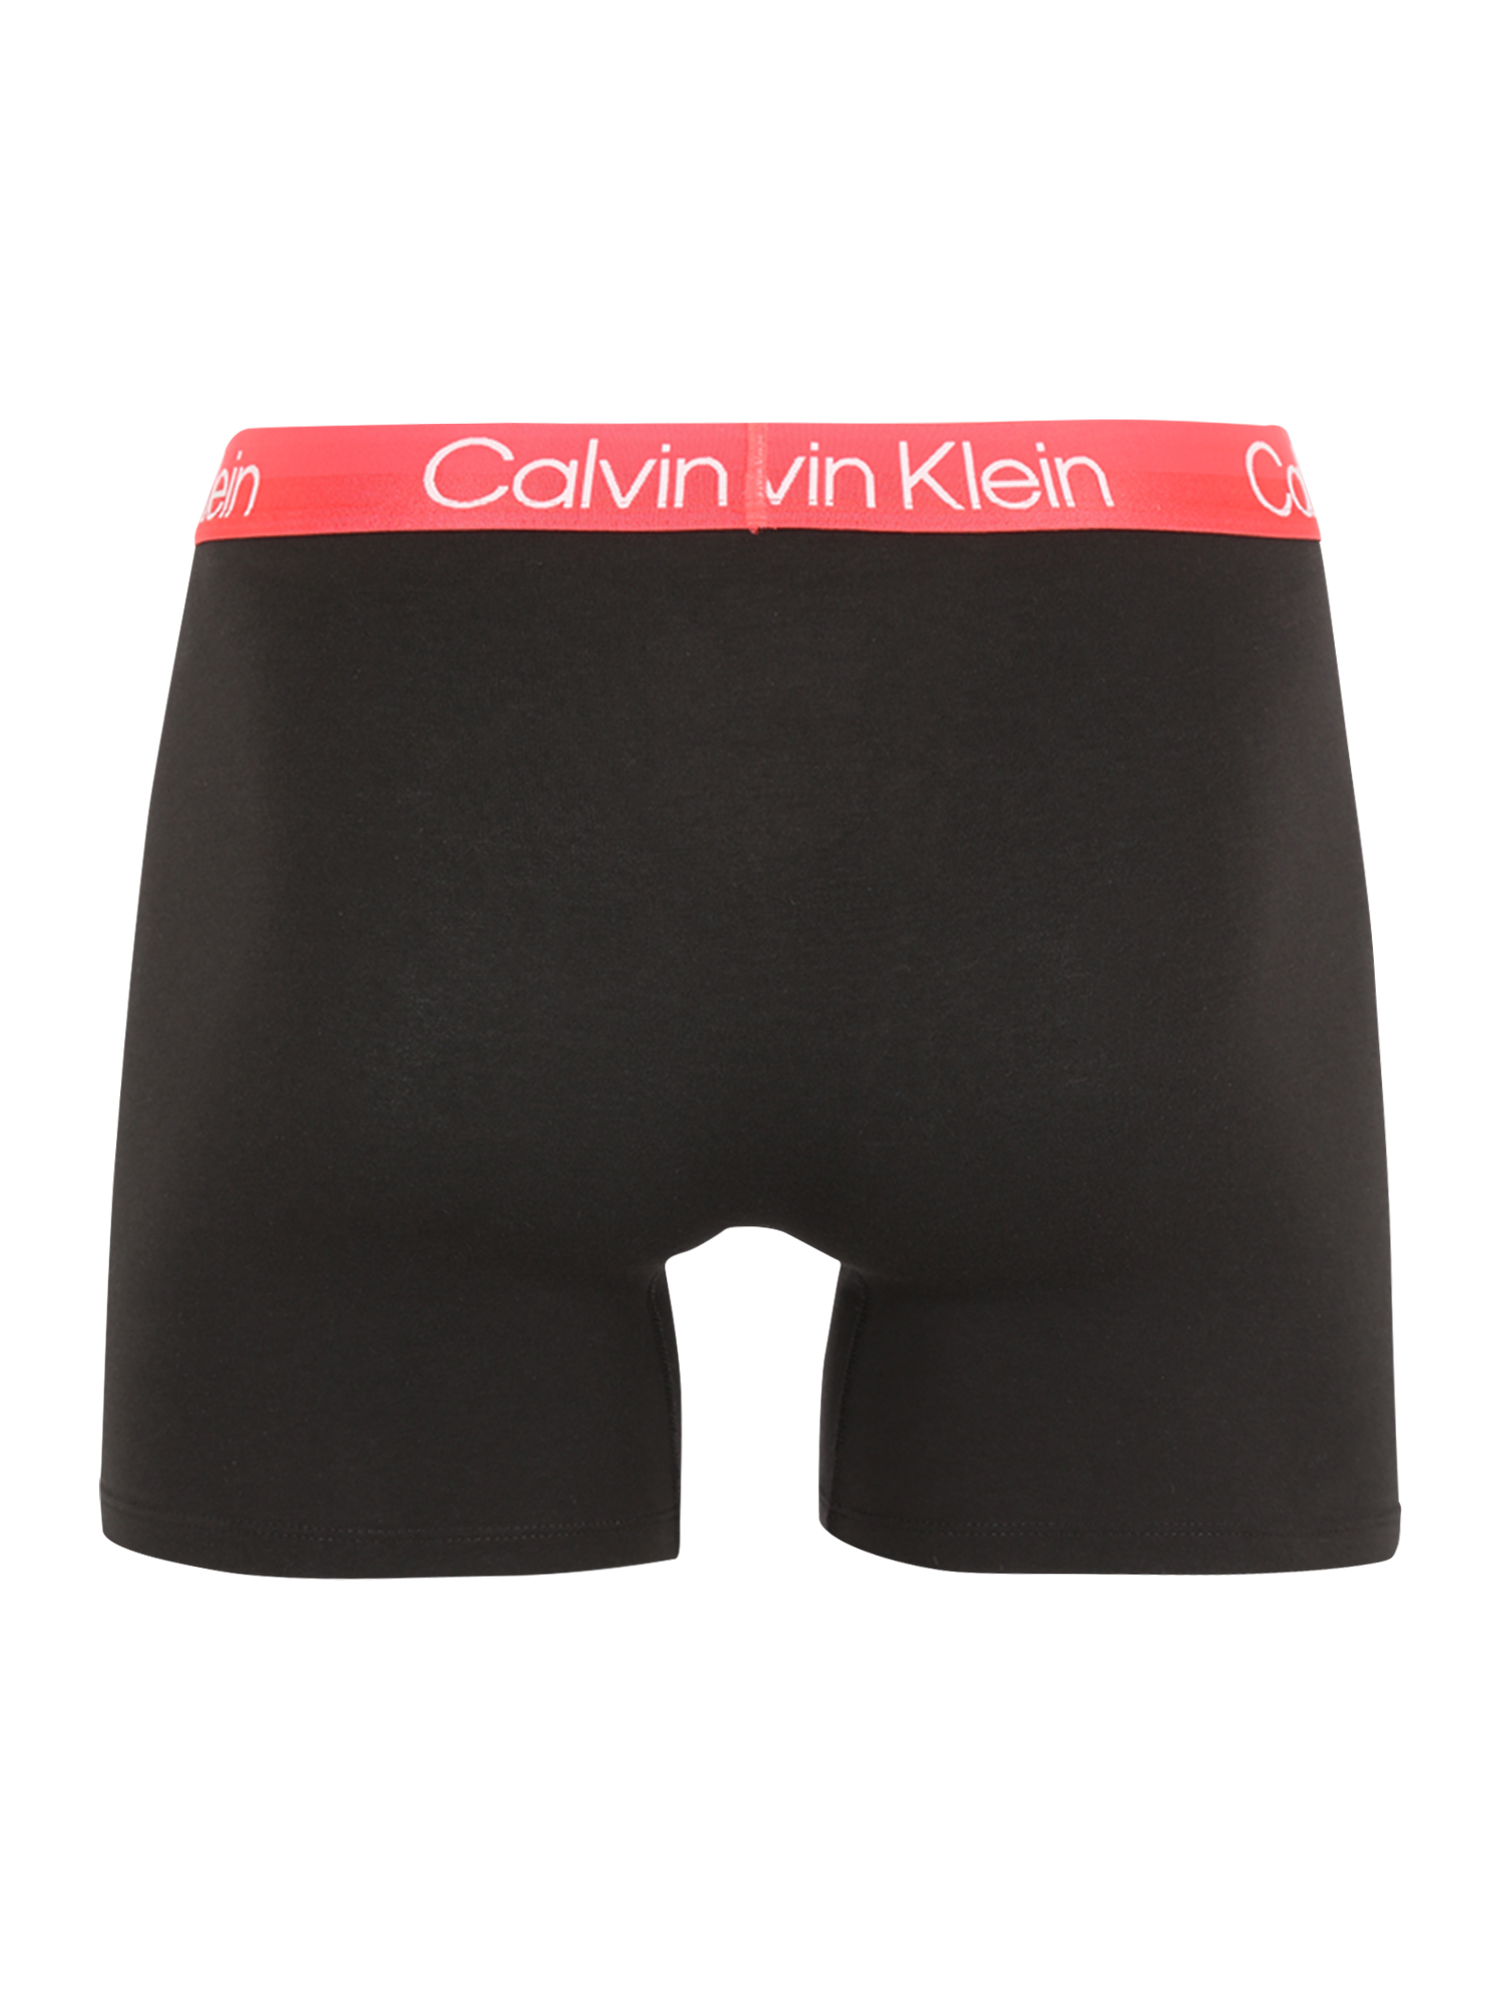 nSuBz Intimo Calvin Klein Underwear Boxer in Nero 